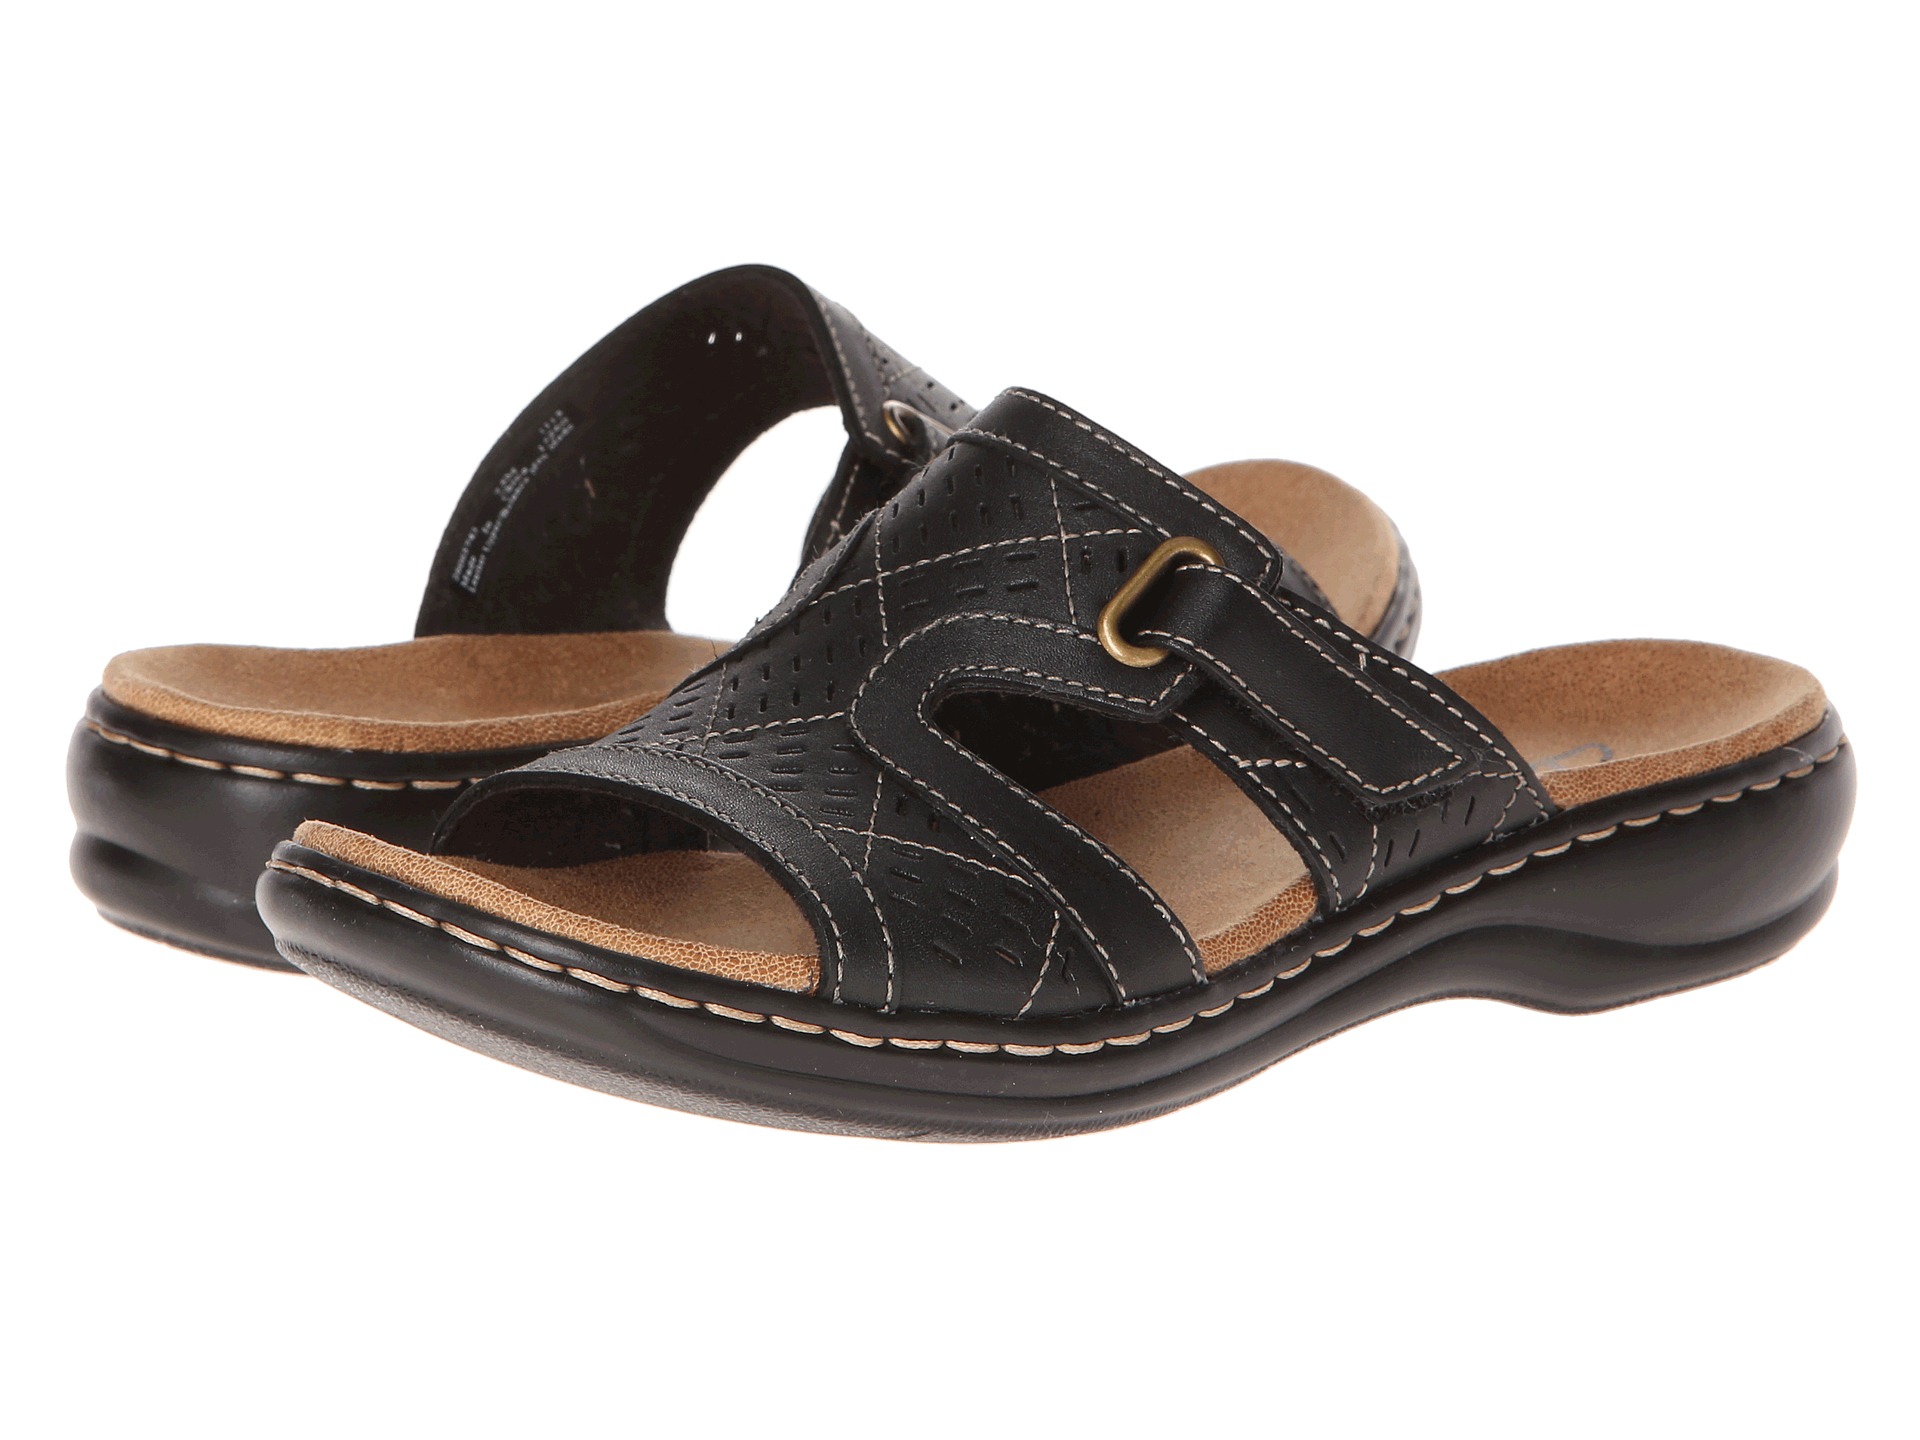 clarks women's shoes leisa sugar sandals